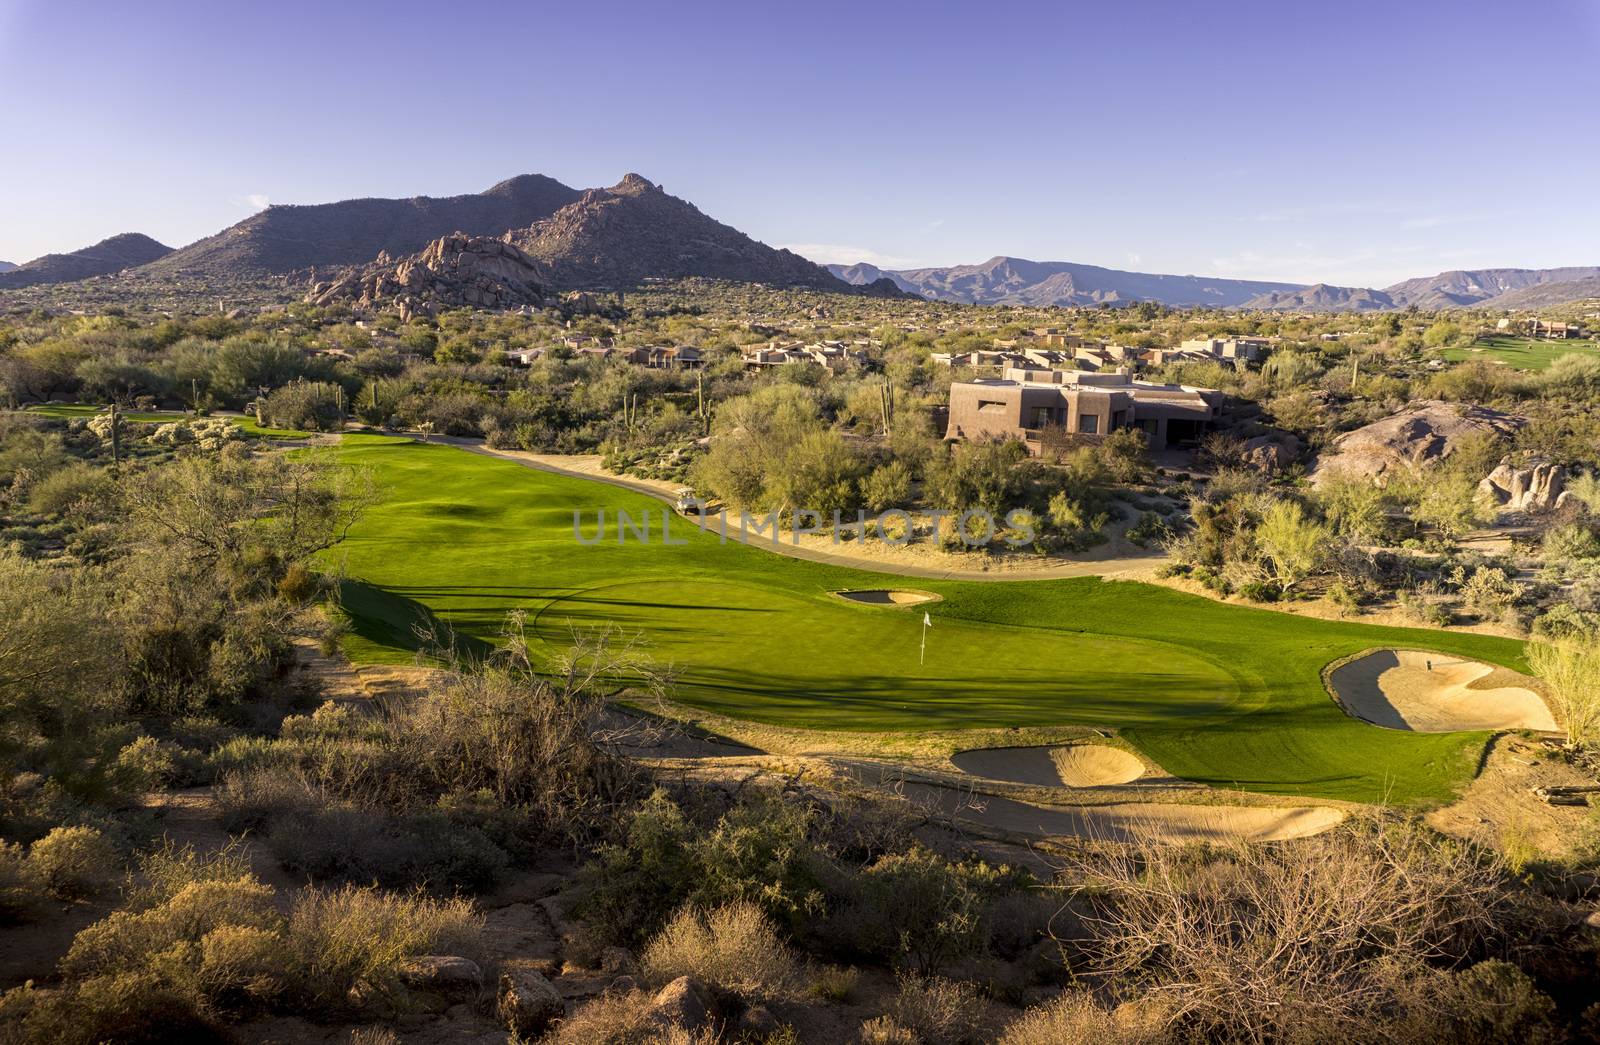 Arizona Desert Golf Course by Paulmatthewphoto